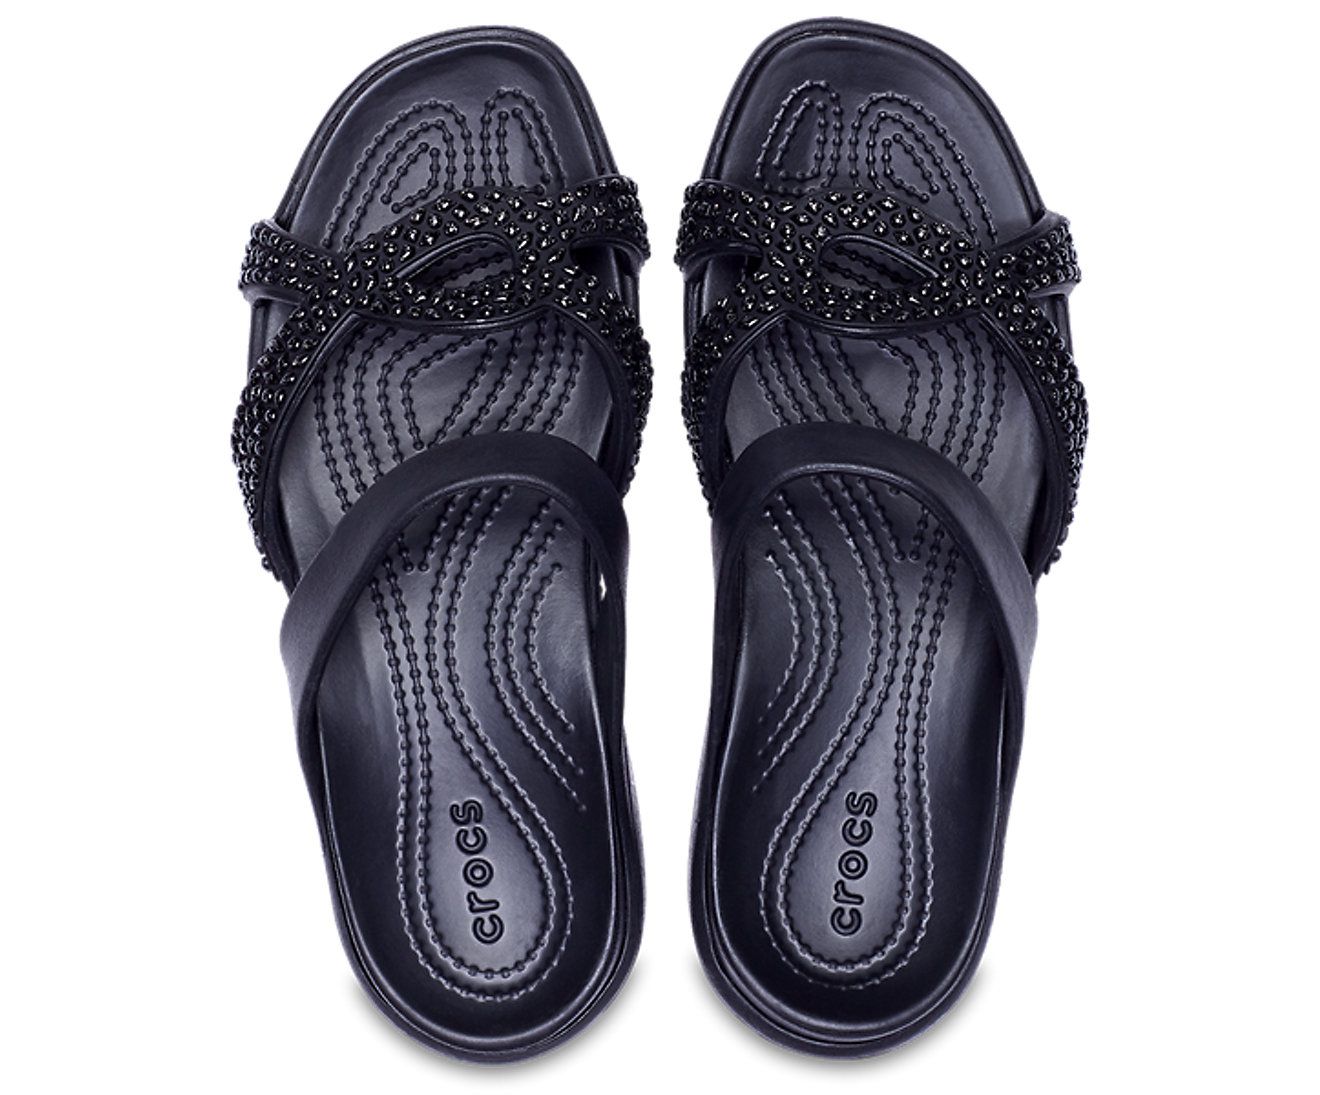 Crocs Black Flats Price in India- Buy Crocs Black Flats Online at Snapdeal